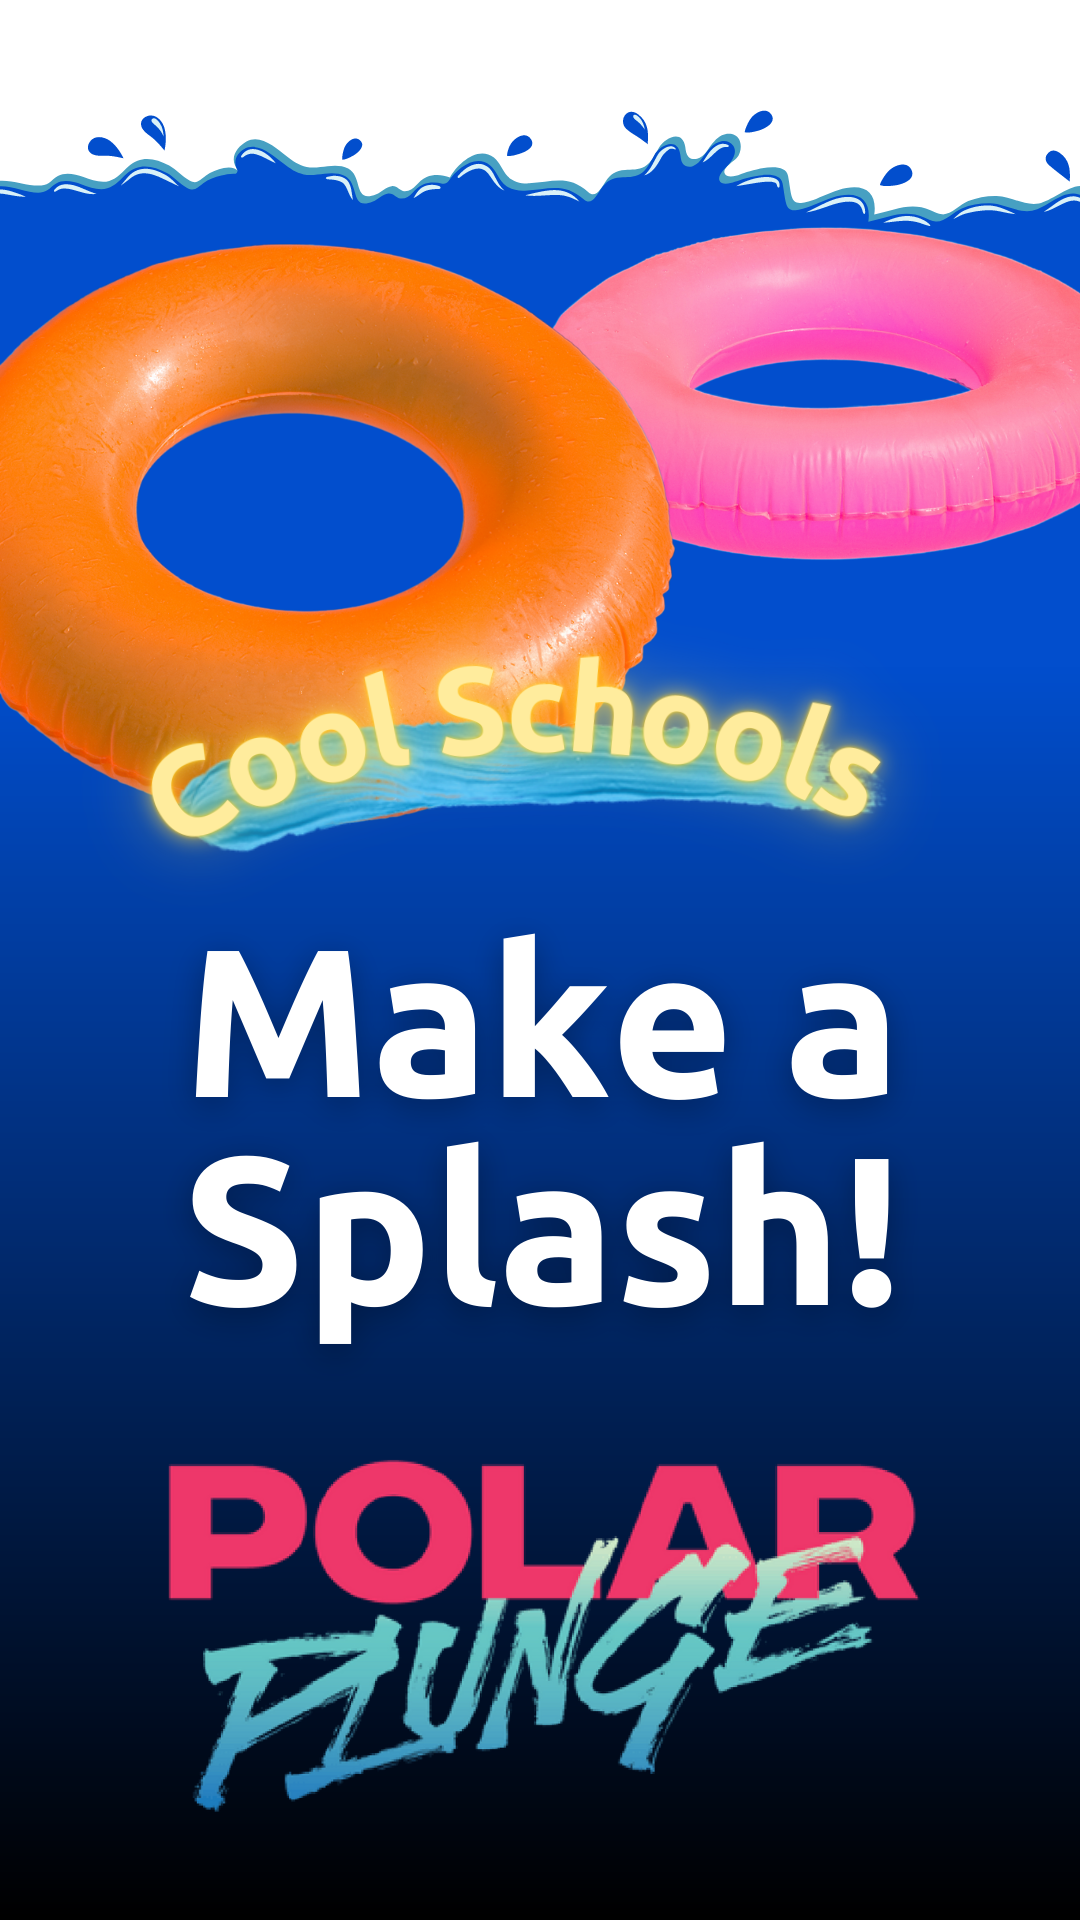 Polar Plunge Cool Schools Instagram Story 1